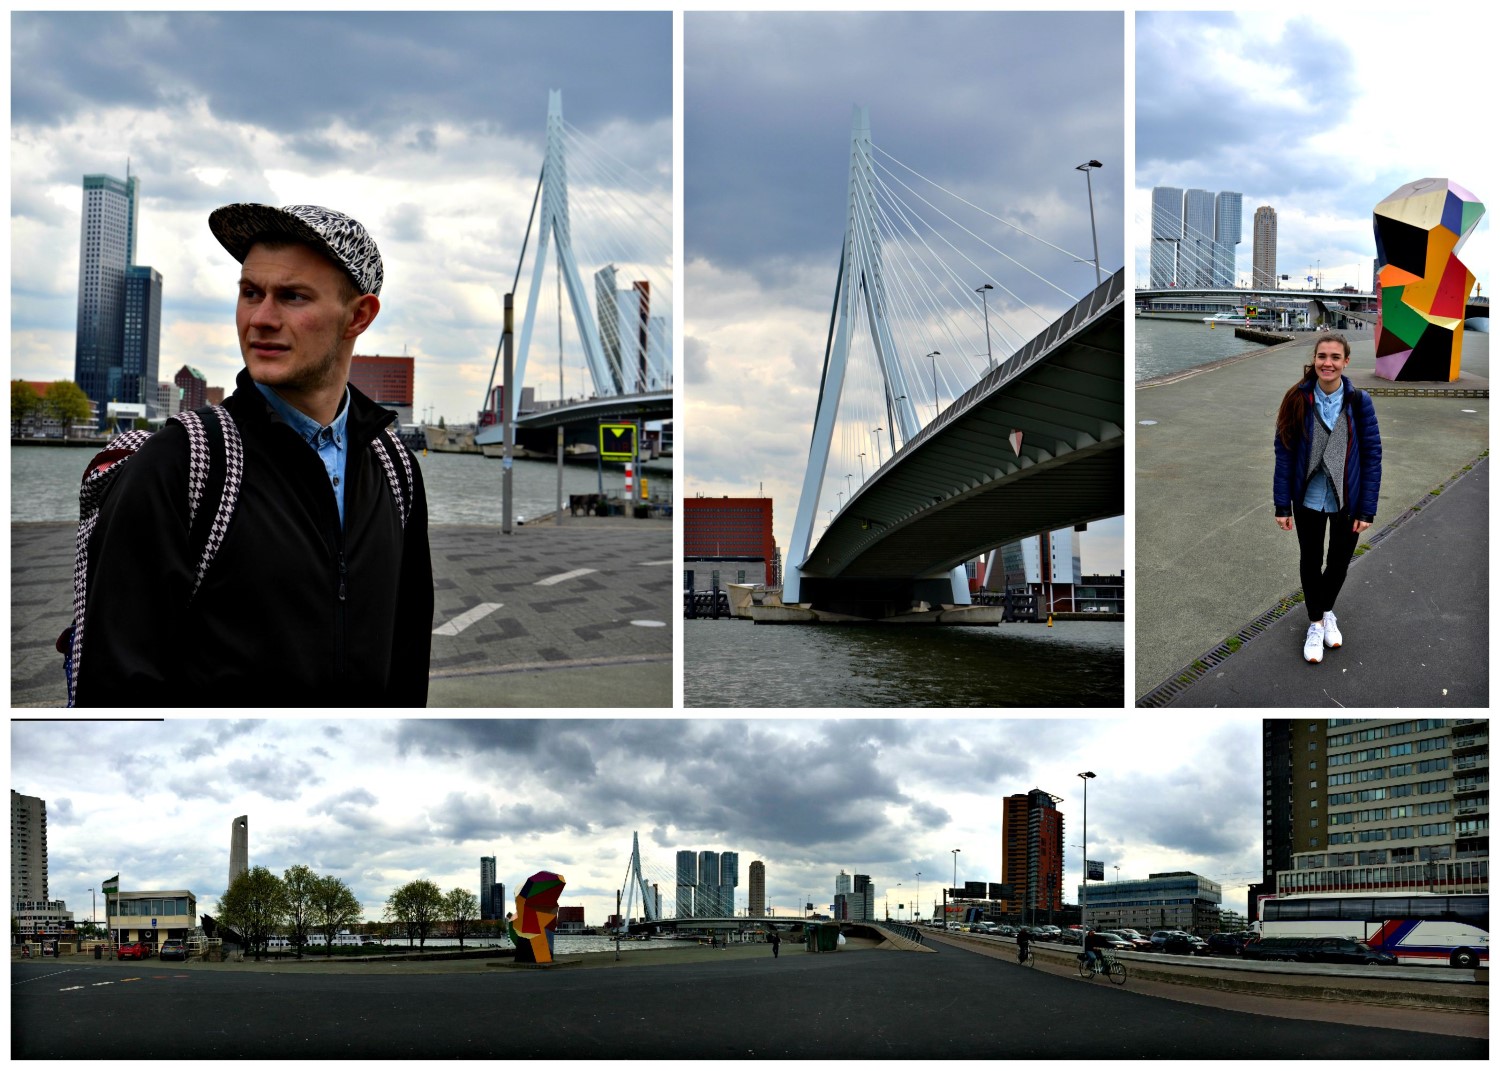 Rotterdam, Kinderdijk, Holandia - bele kaj, blog podróżniczy po śląsku